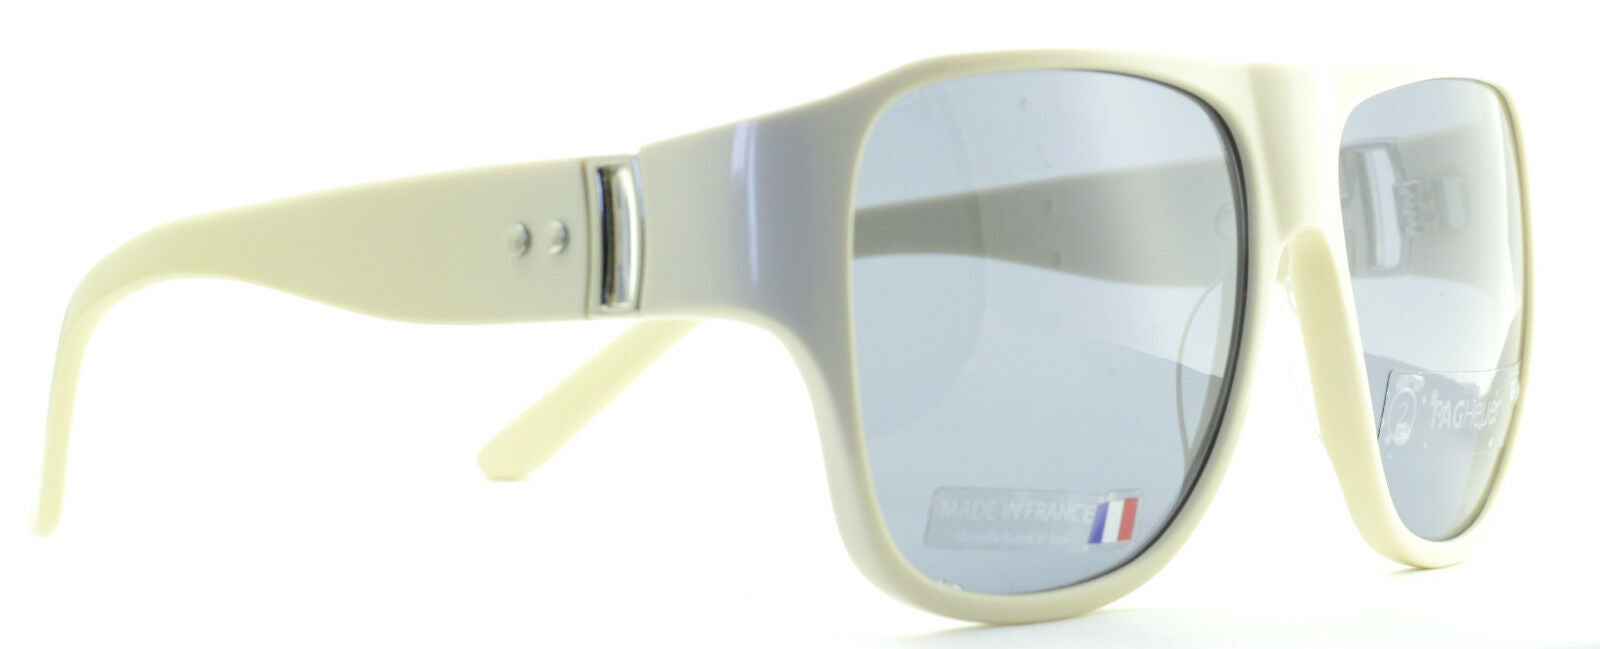 TAG HEUER TH 9100 103 BY SHARAPOVA 55mm Sunglasses Shades Frames New - France